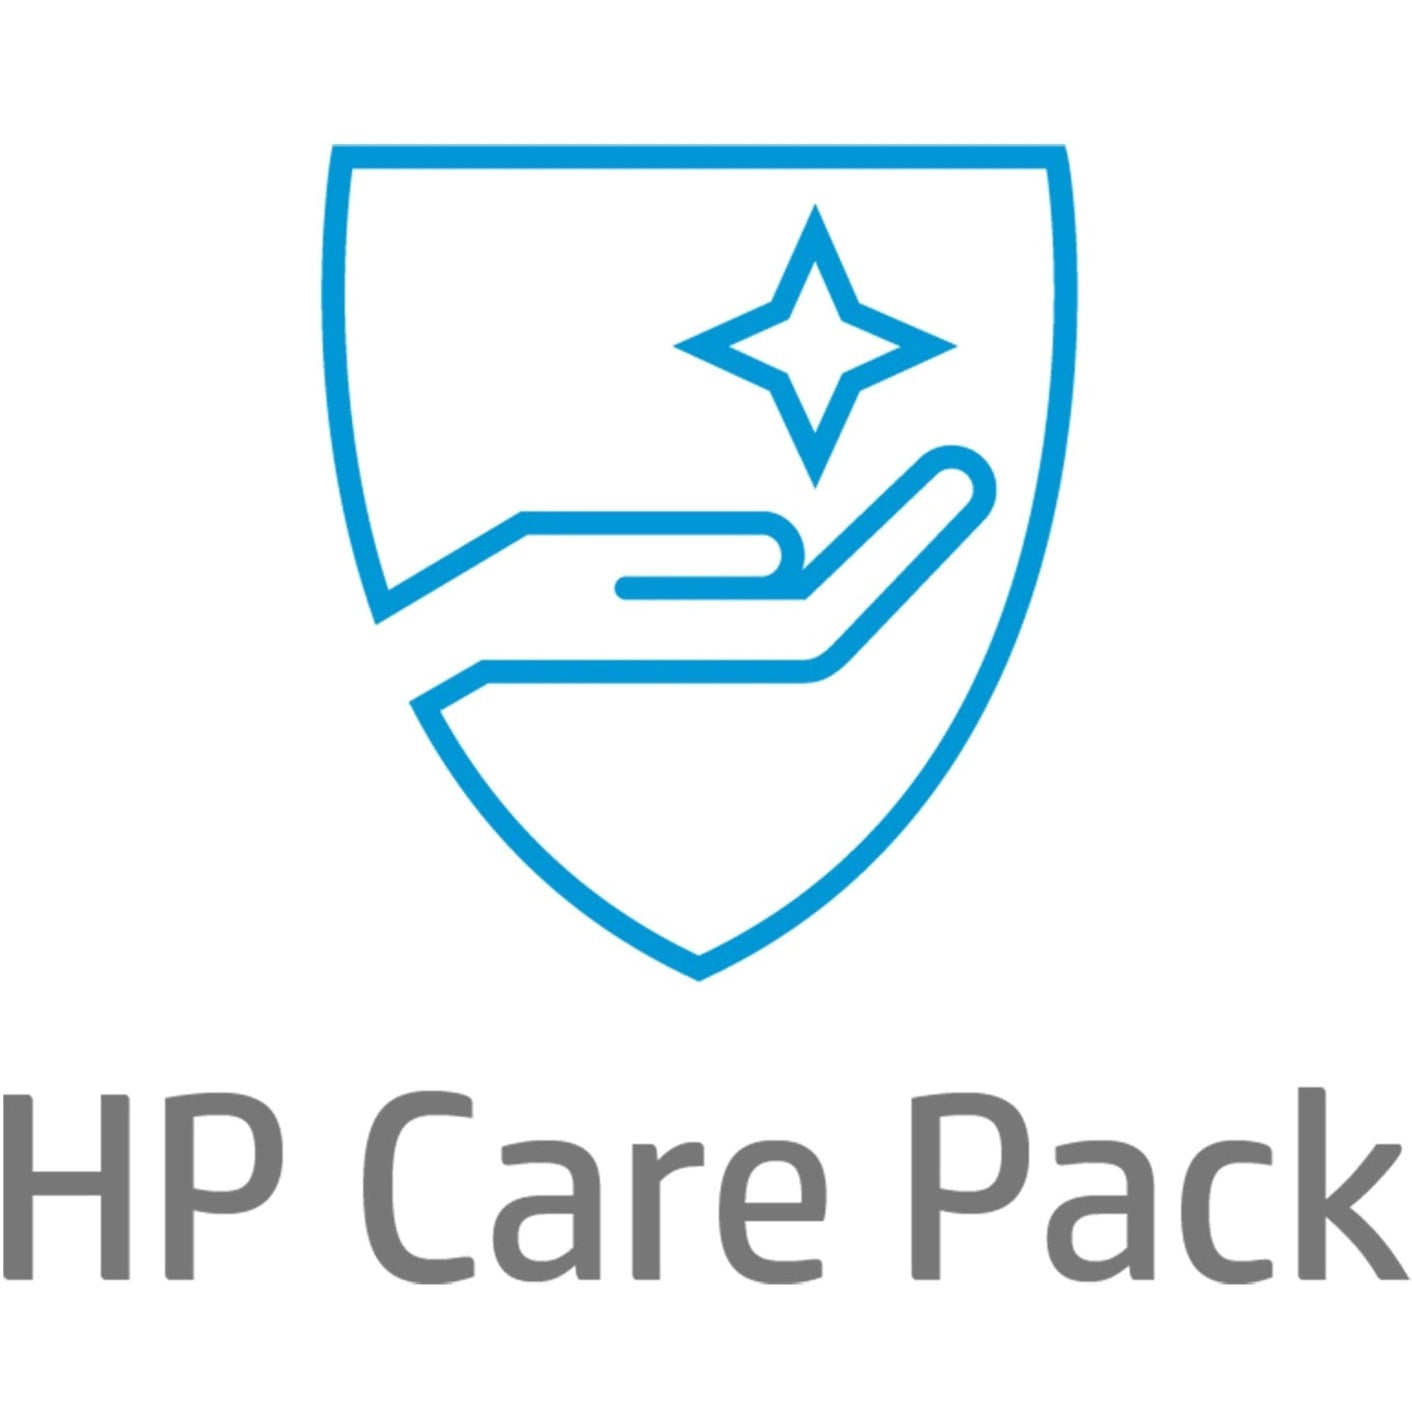 HP Care Pack - 5 Year - Service (UQ830E)